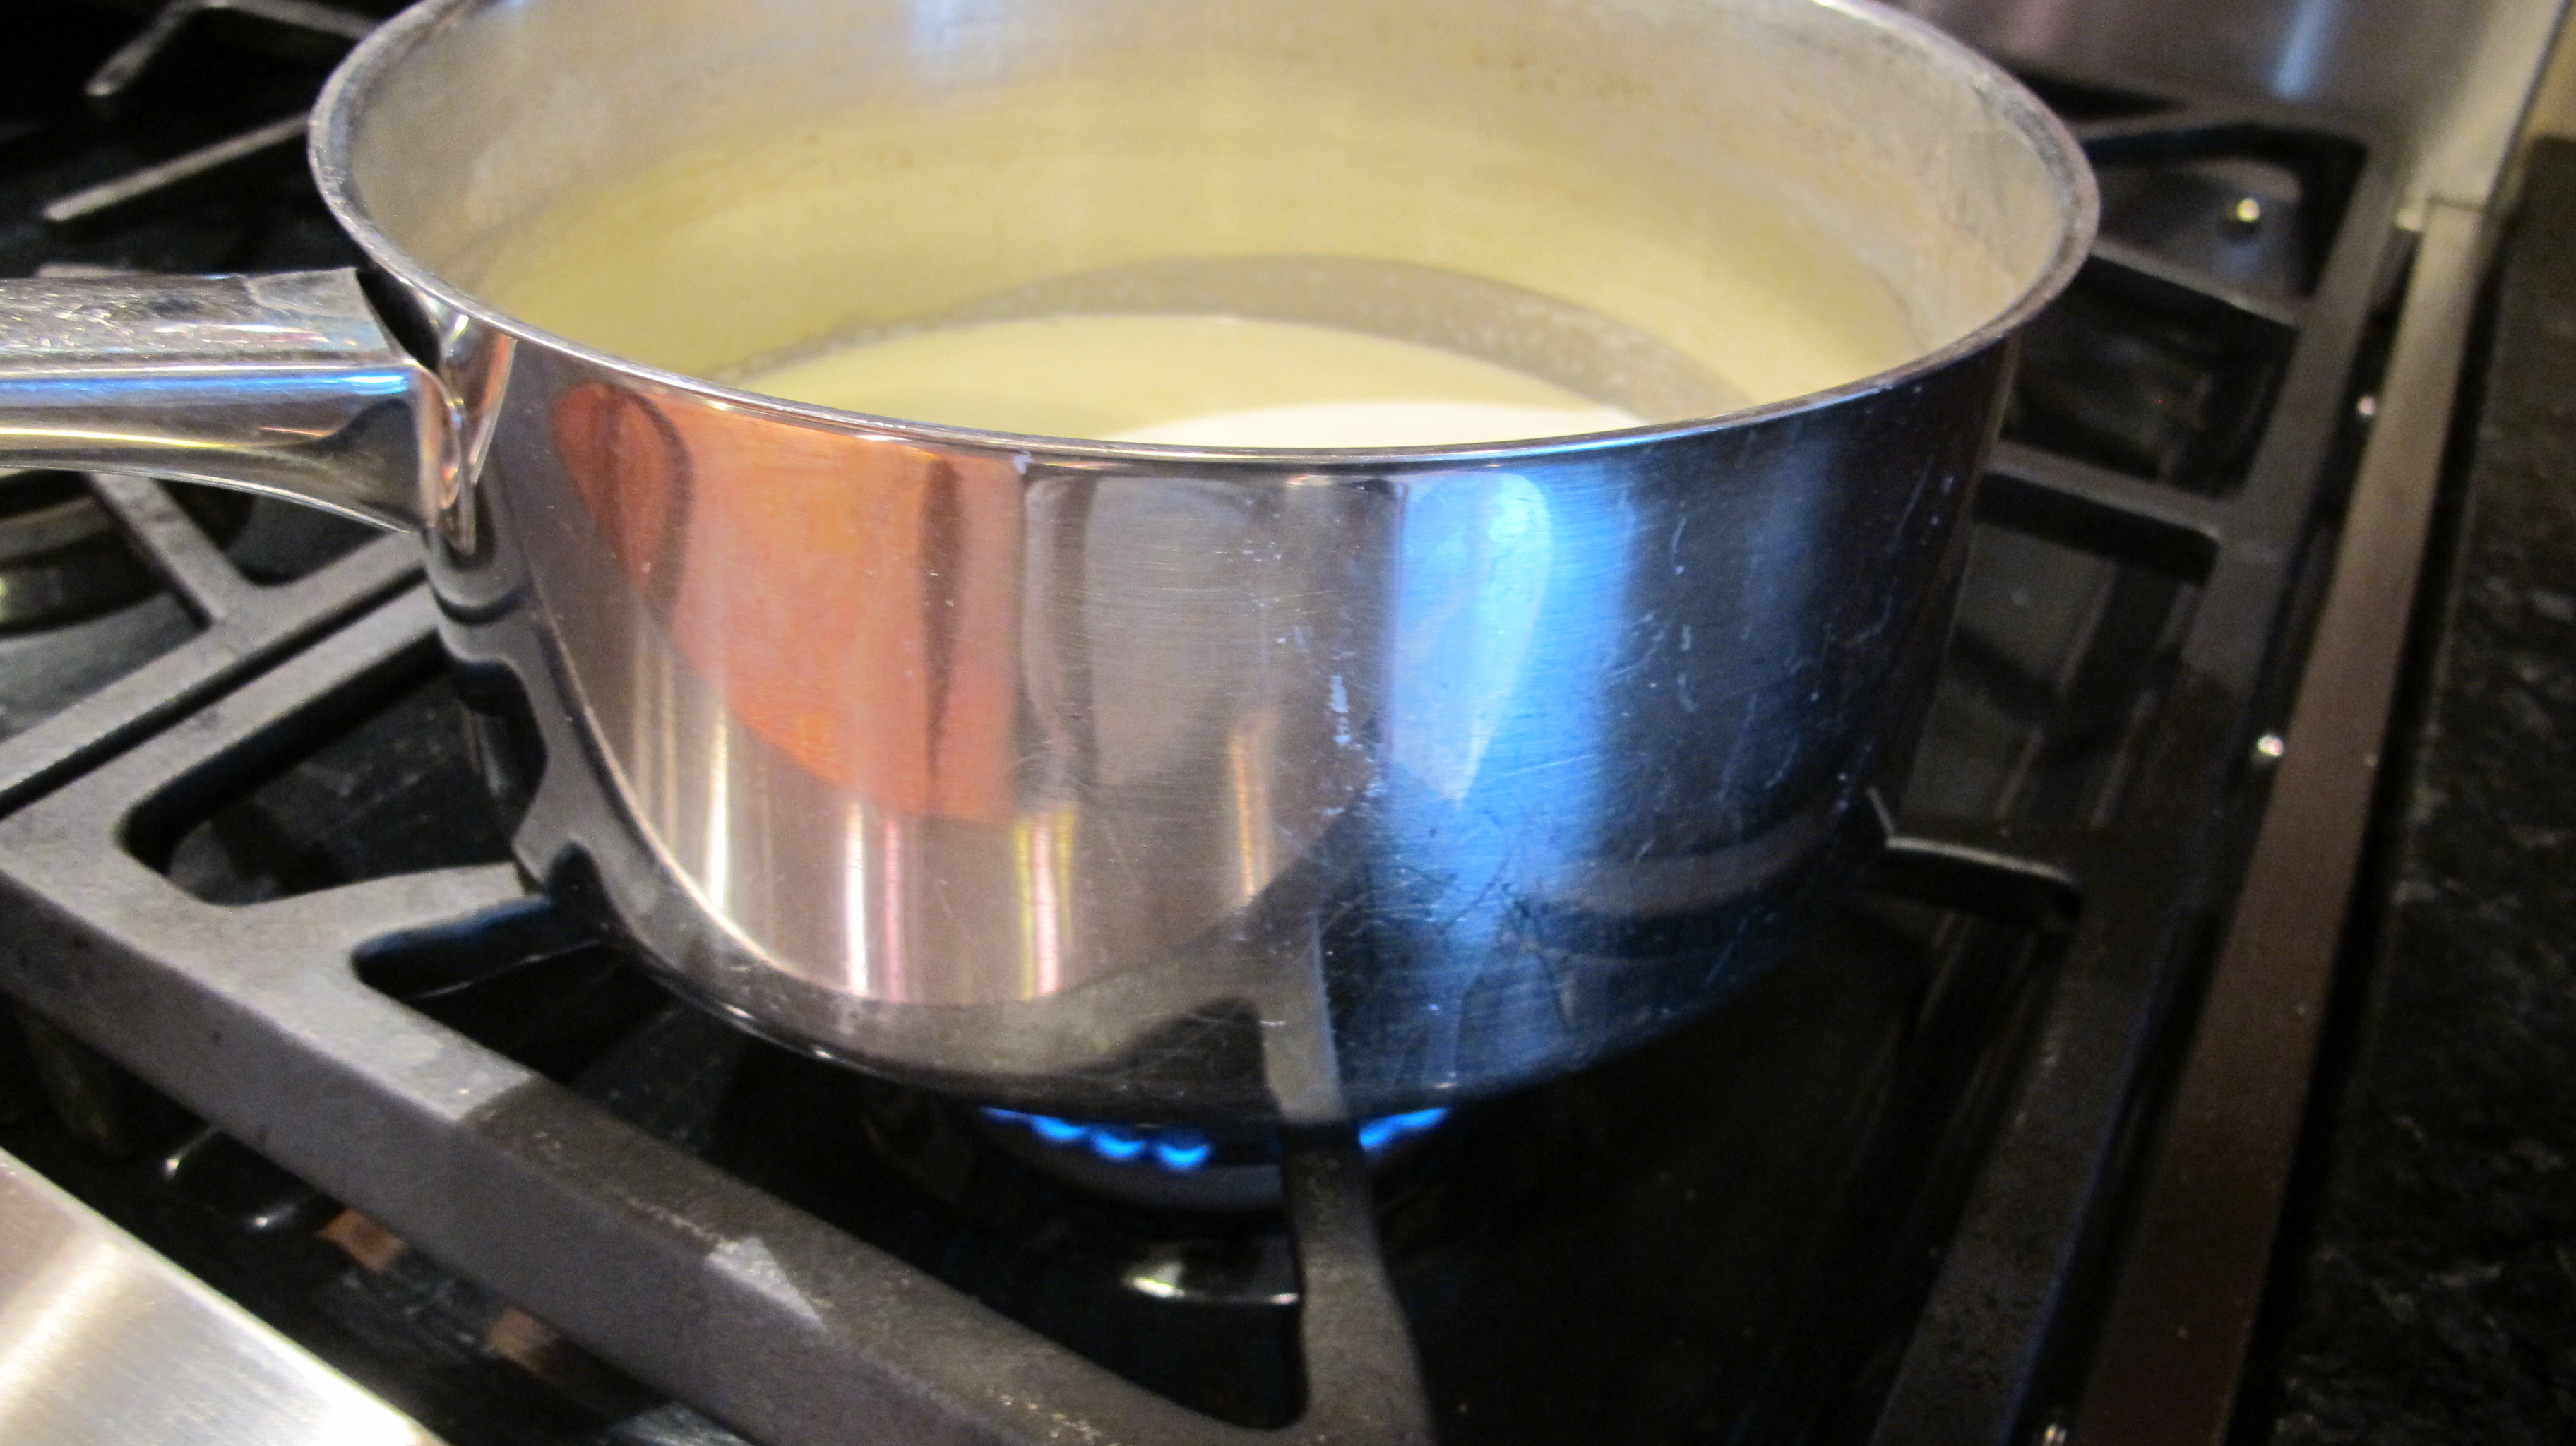 Heating the heavy cream. 